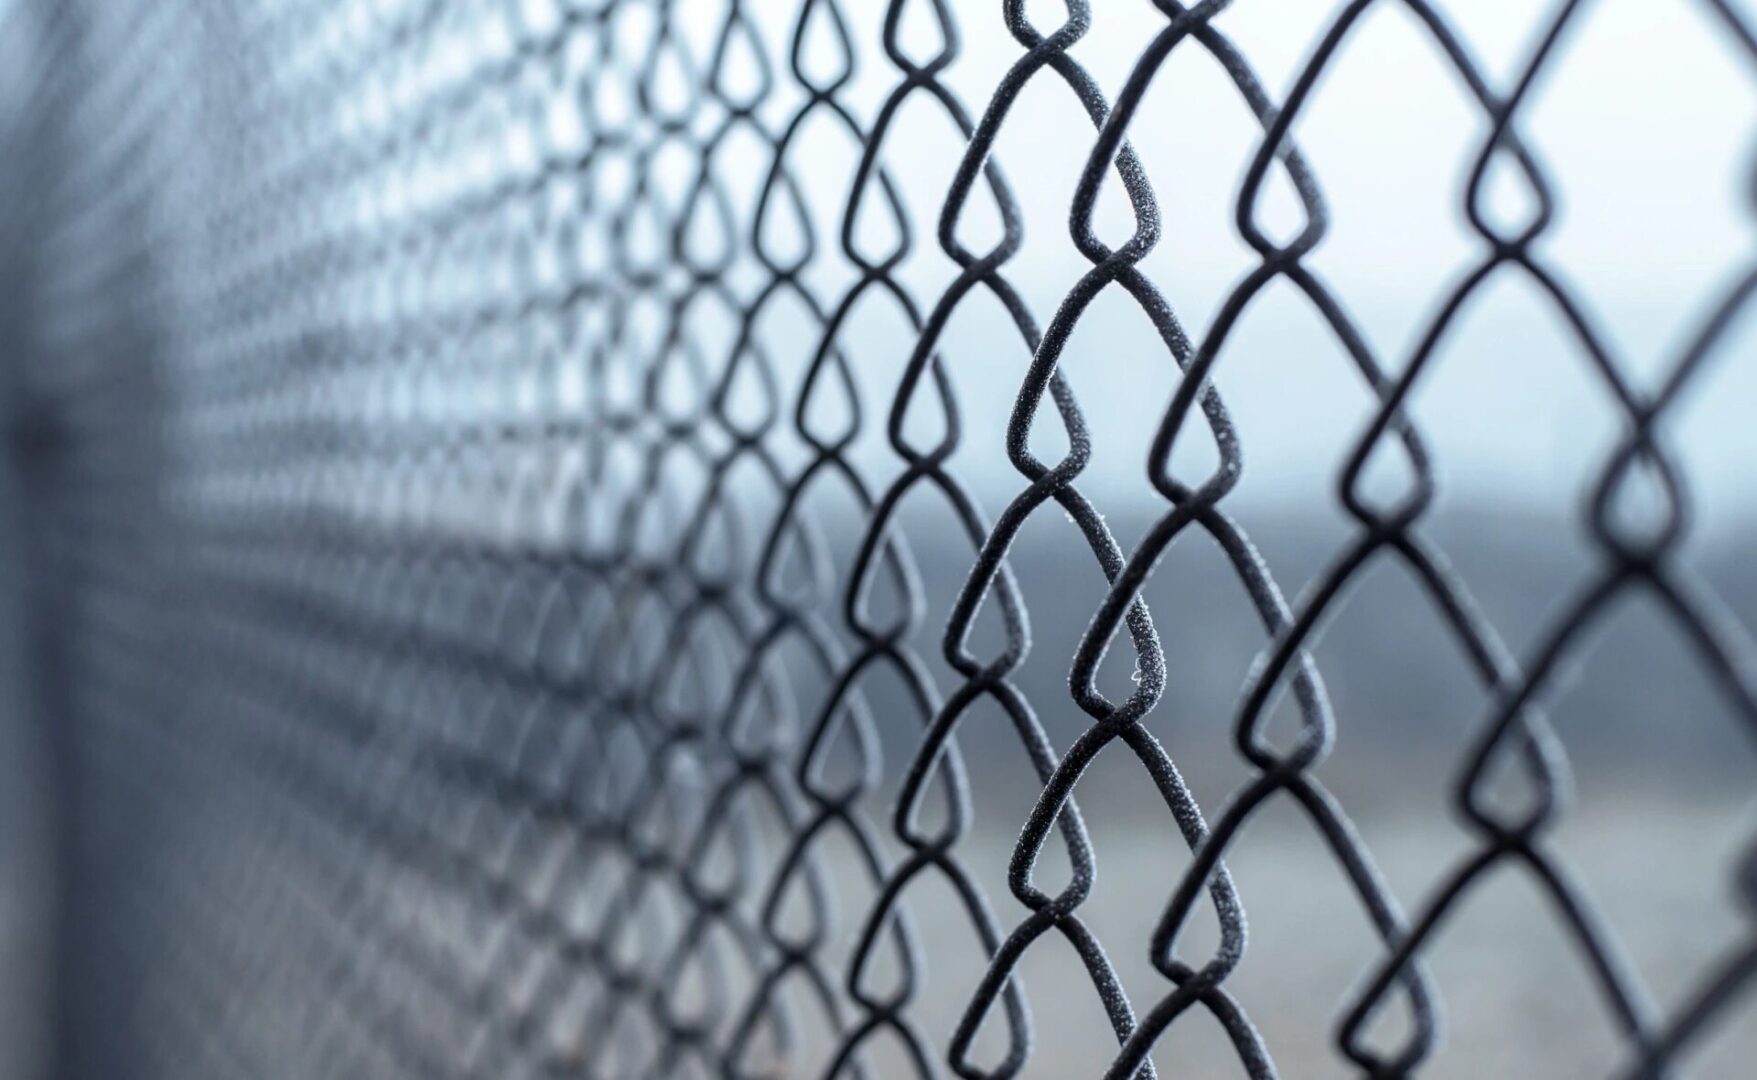 Adron Fence